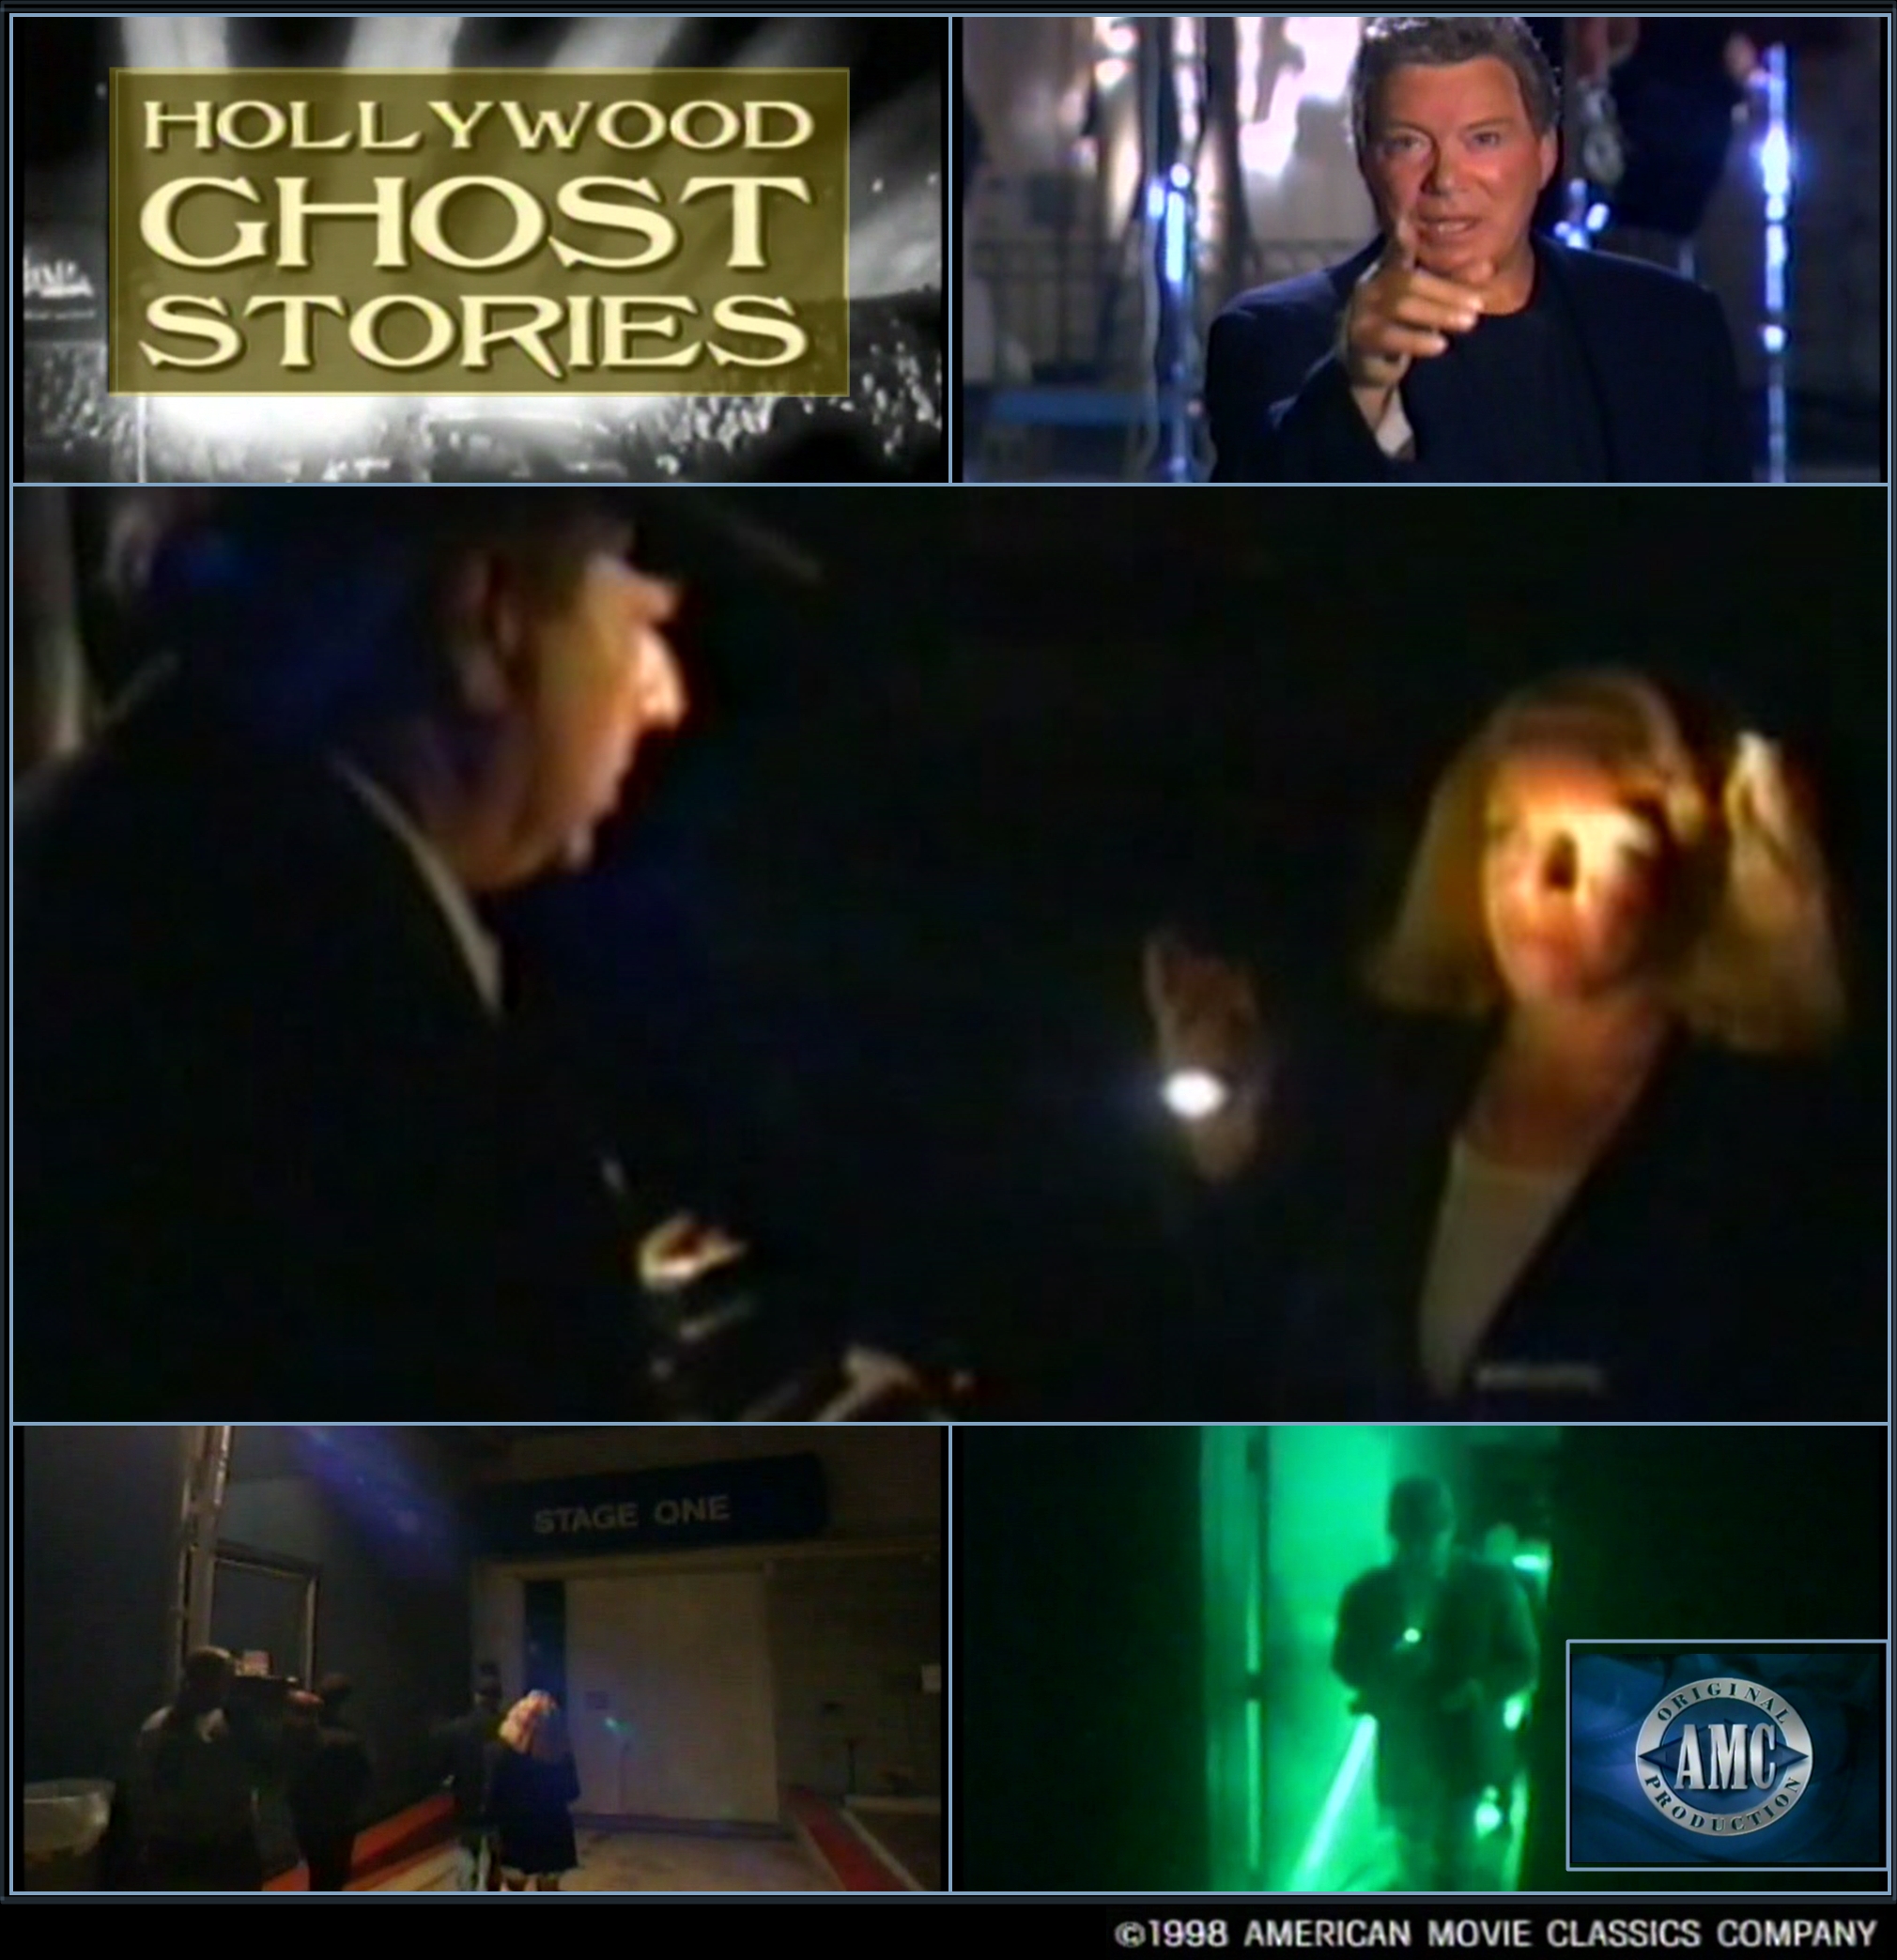 ISPR Investigation for AMC's 1st original program, HOLLYWOOD GHOST STORIES hosted by William Shatner